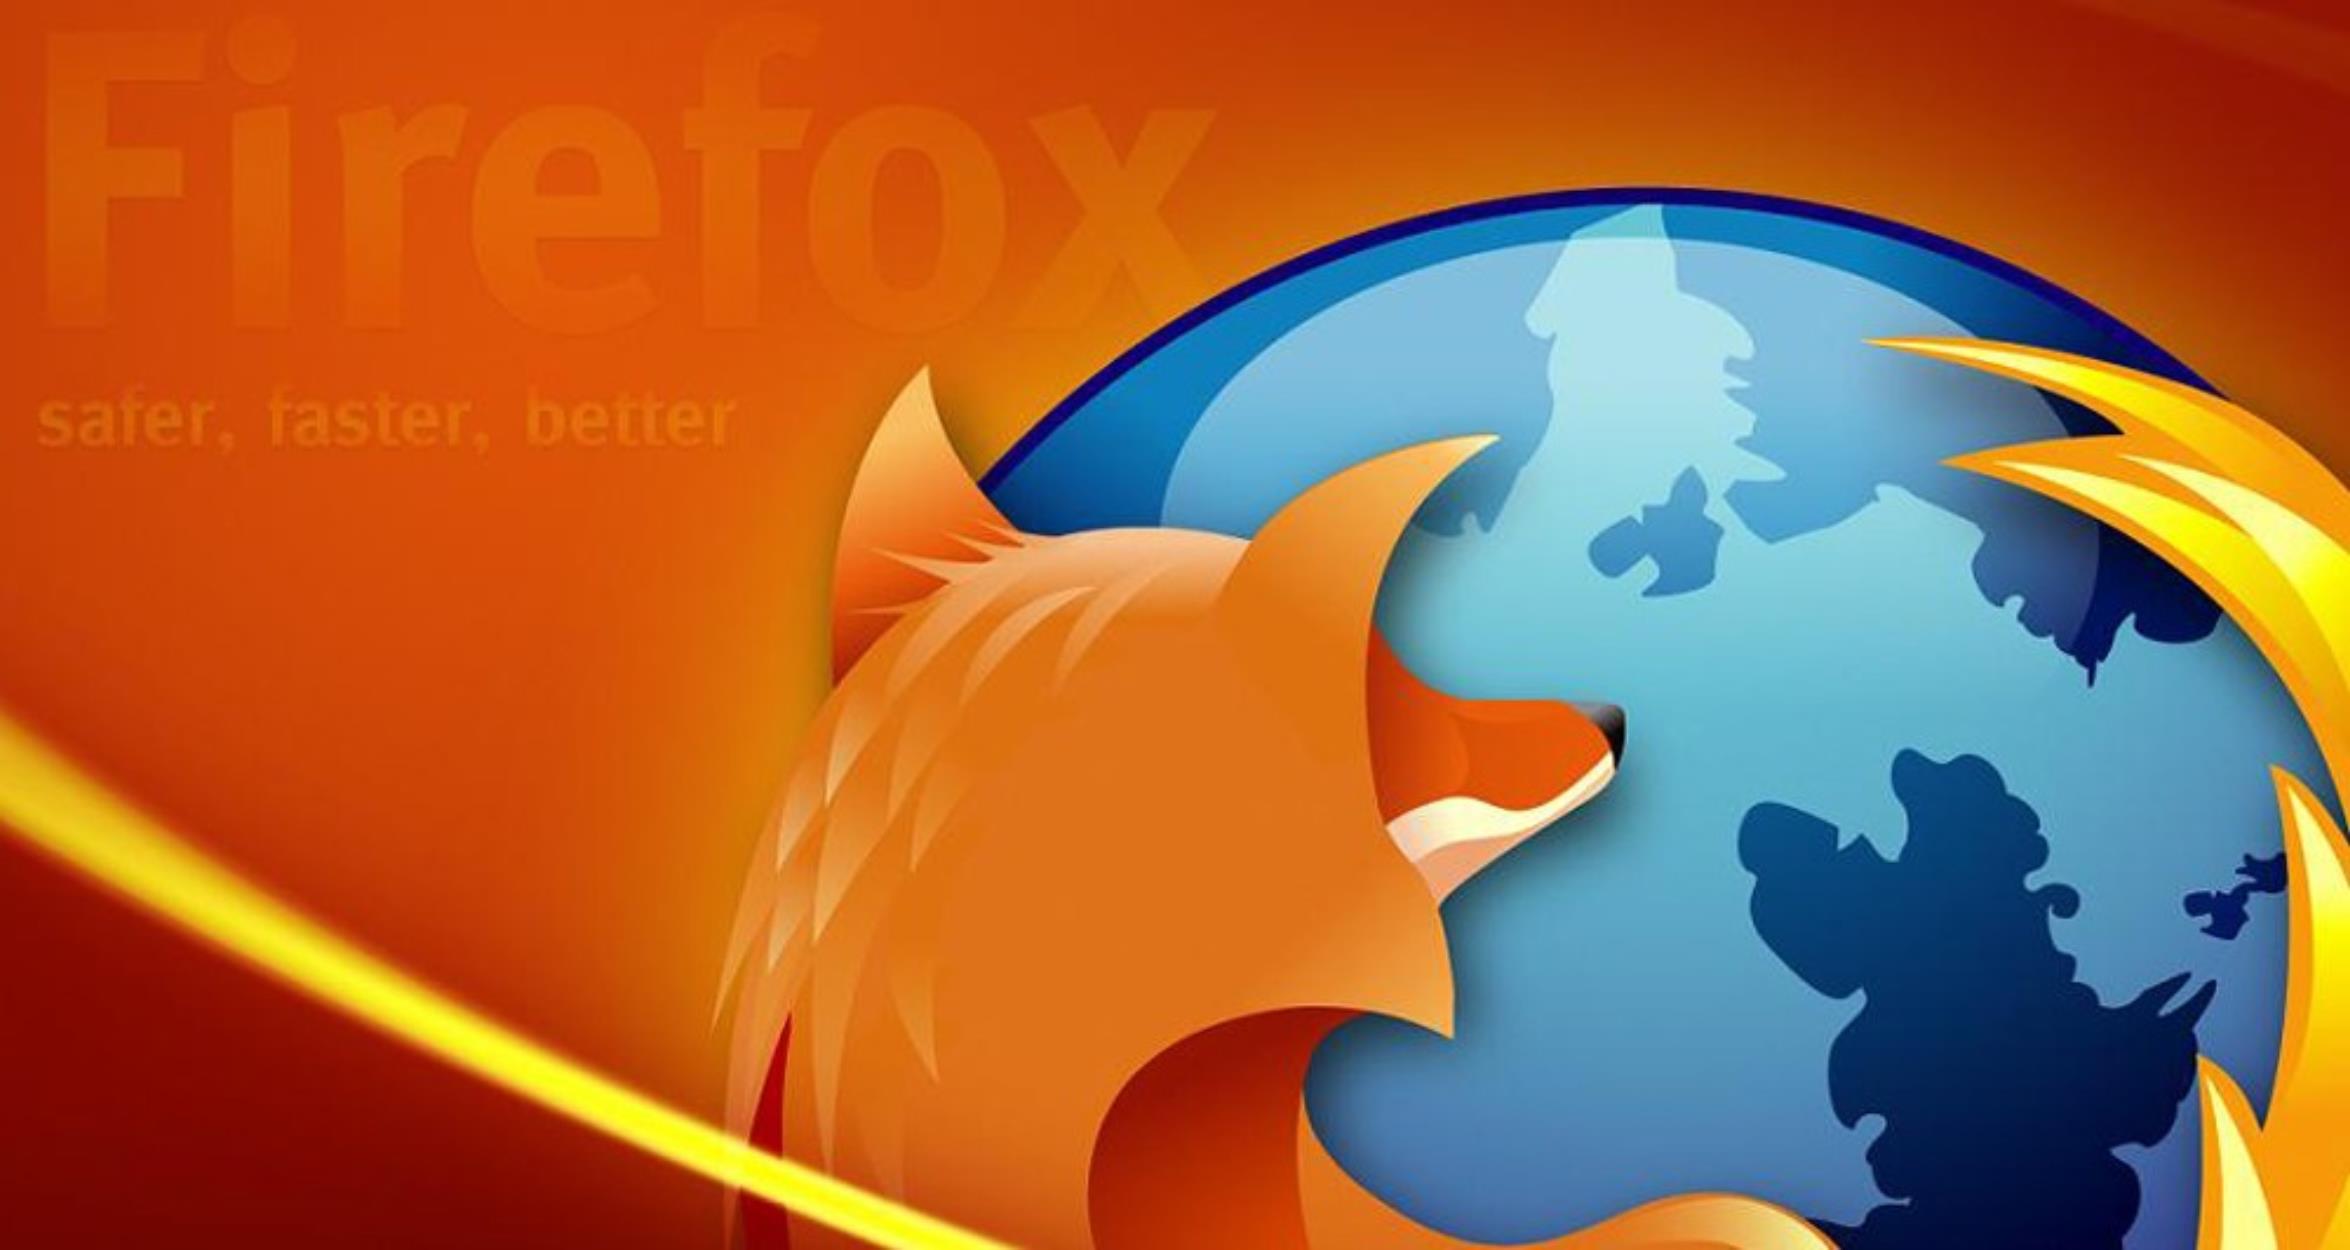 Firefox problems